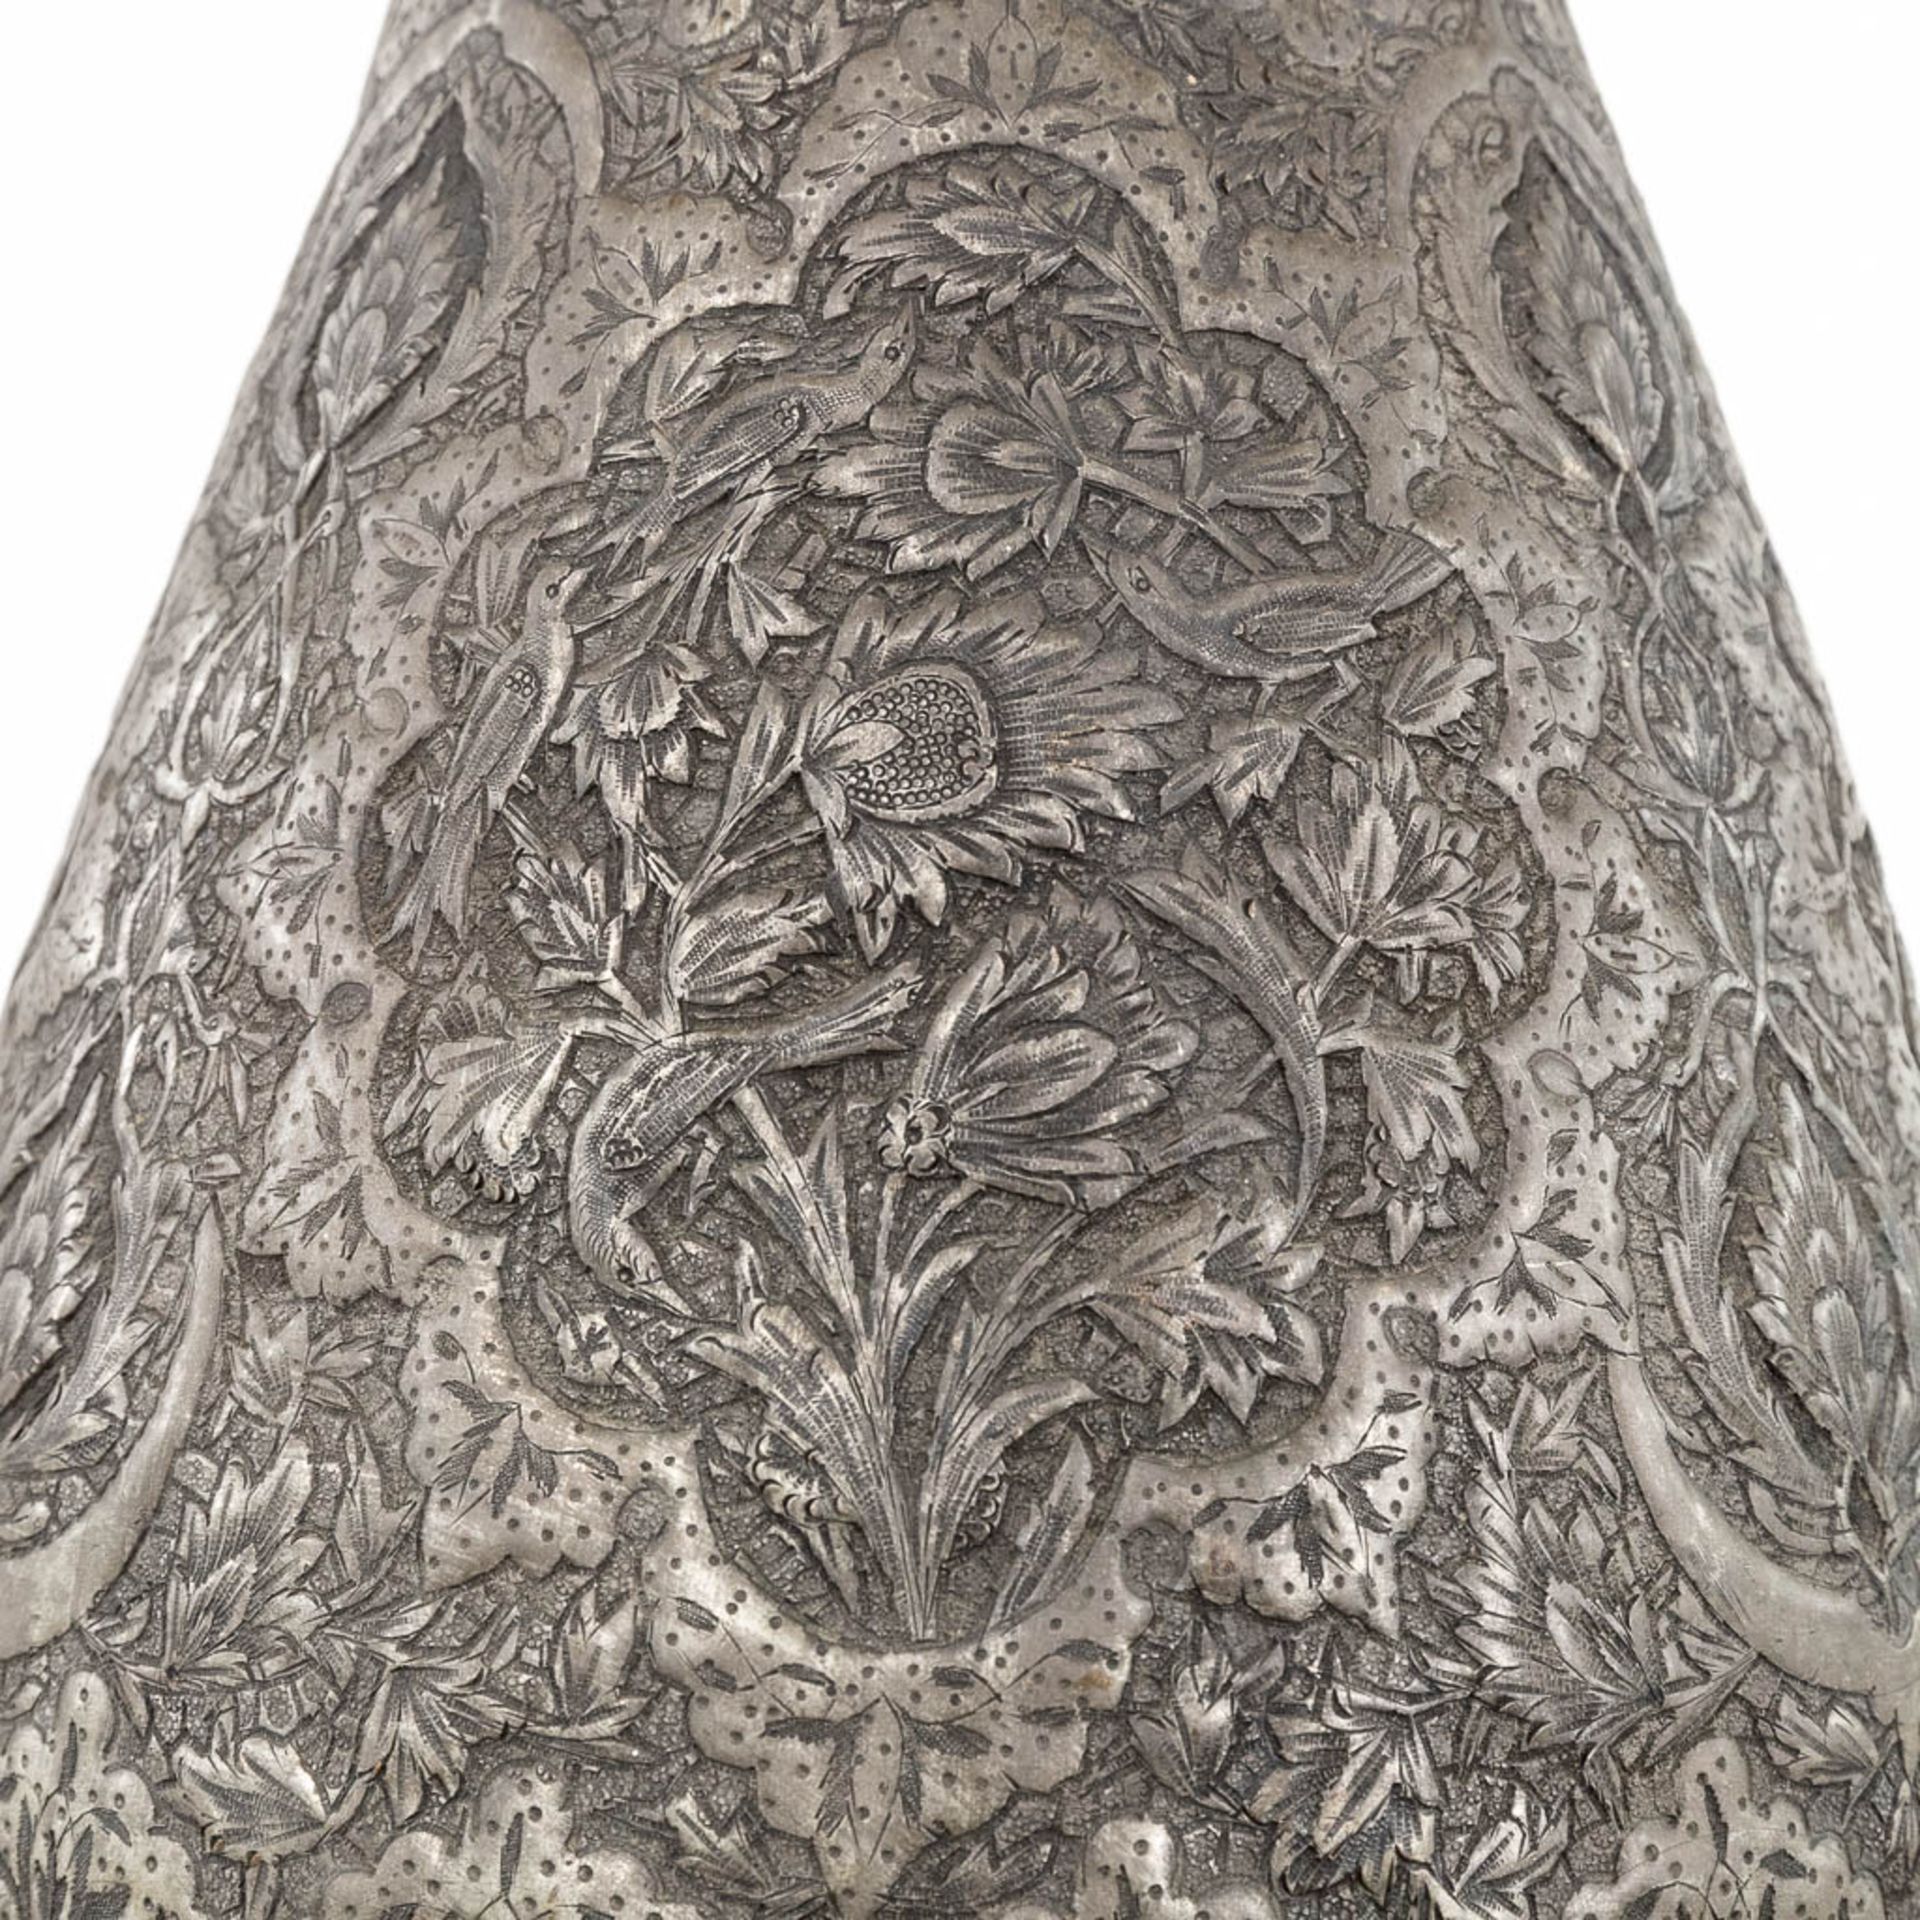 A large decorative vase, India. 19th C. (H:128 x D:32 cm) - Image 10 of 14